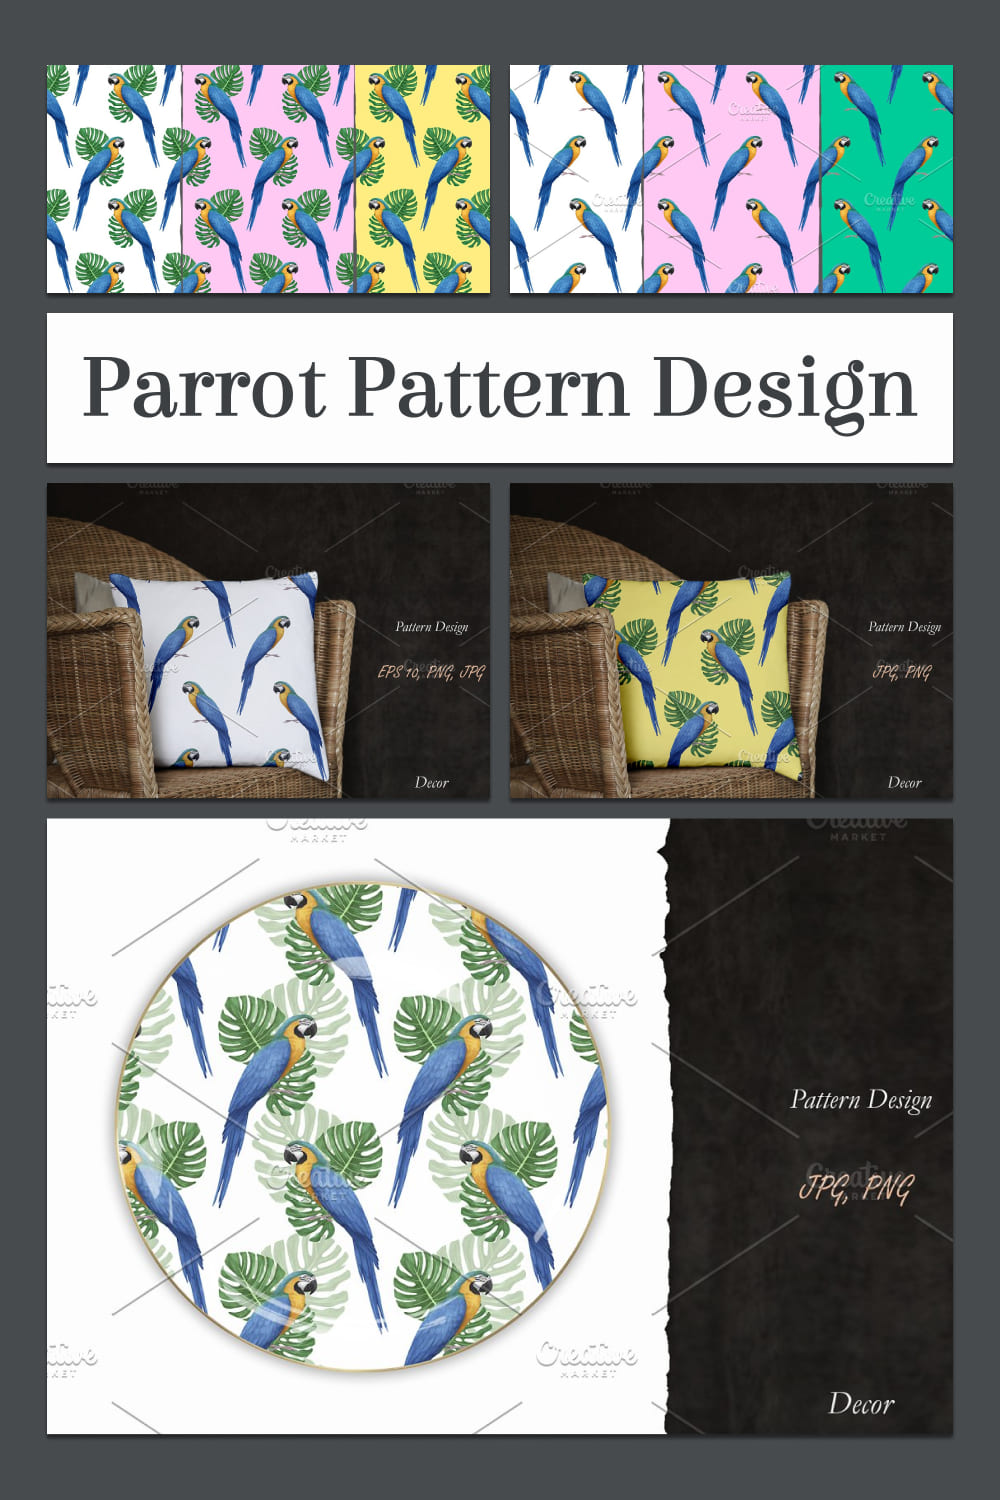 Parrot pattern design - pinterest image preview.